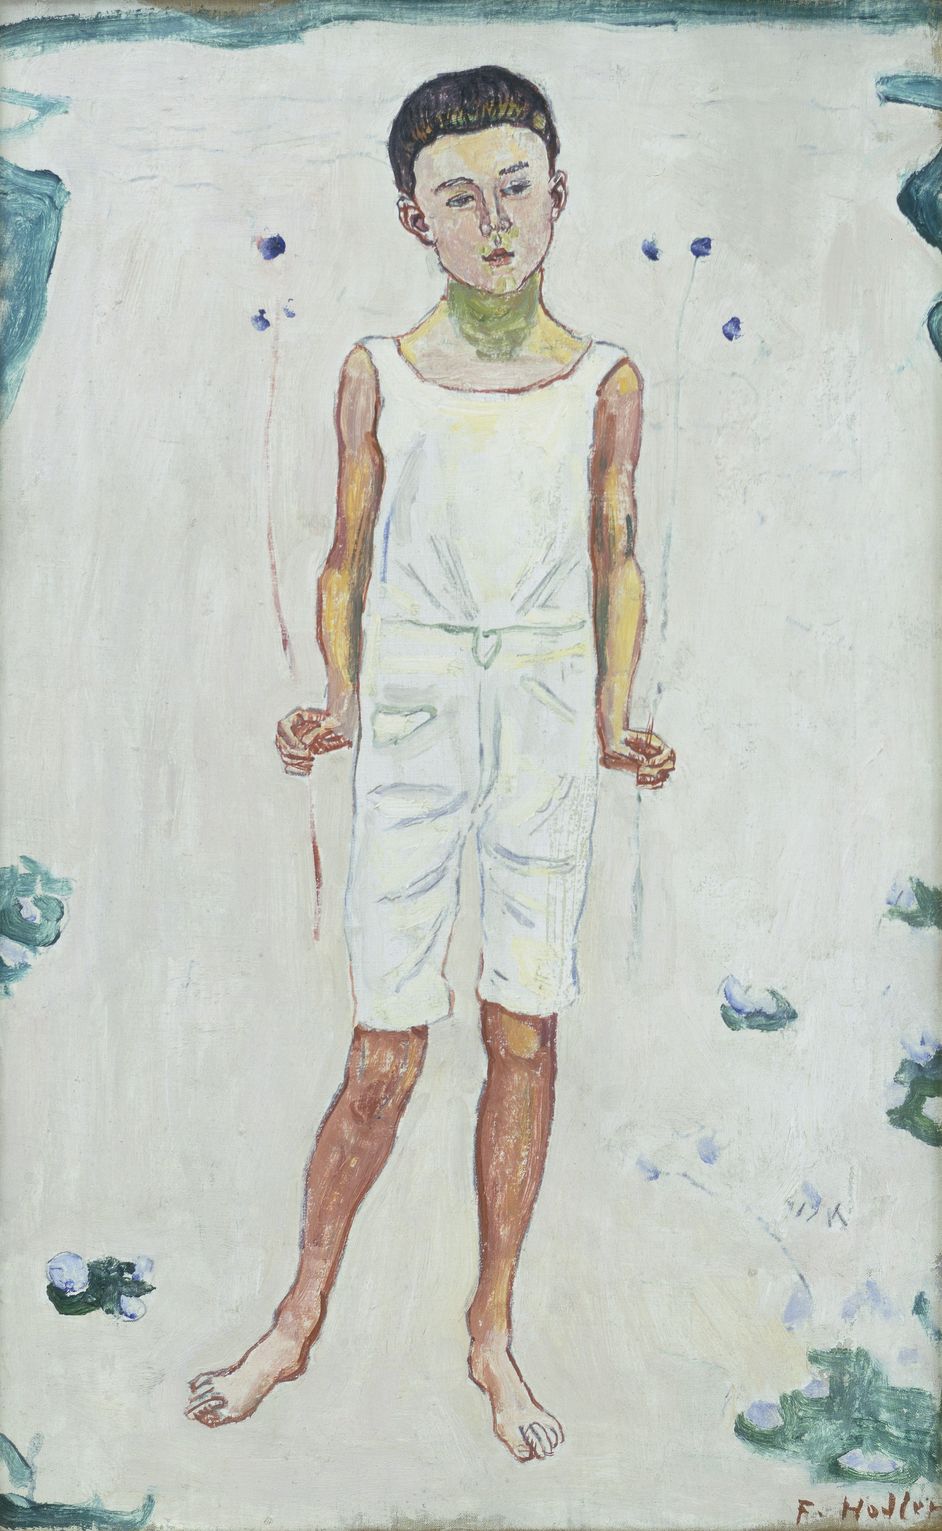 Oil on canvas, 50 × 31.2 cm